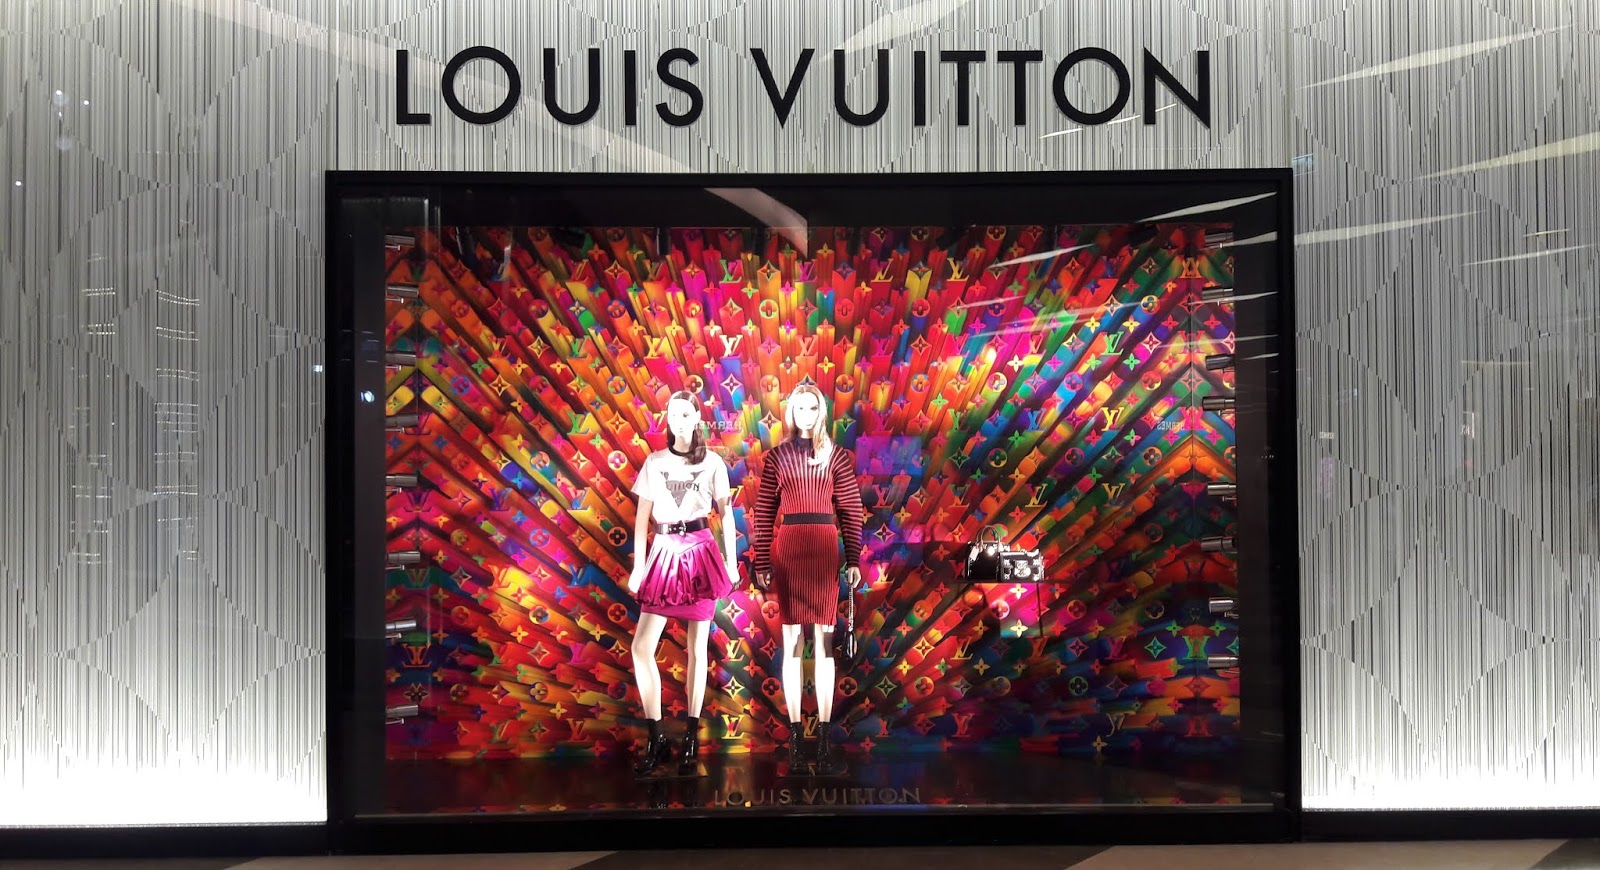 Joyly on X: New blog: LOUIS VUITTON window display at Emporium in